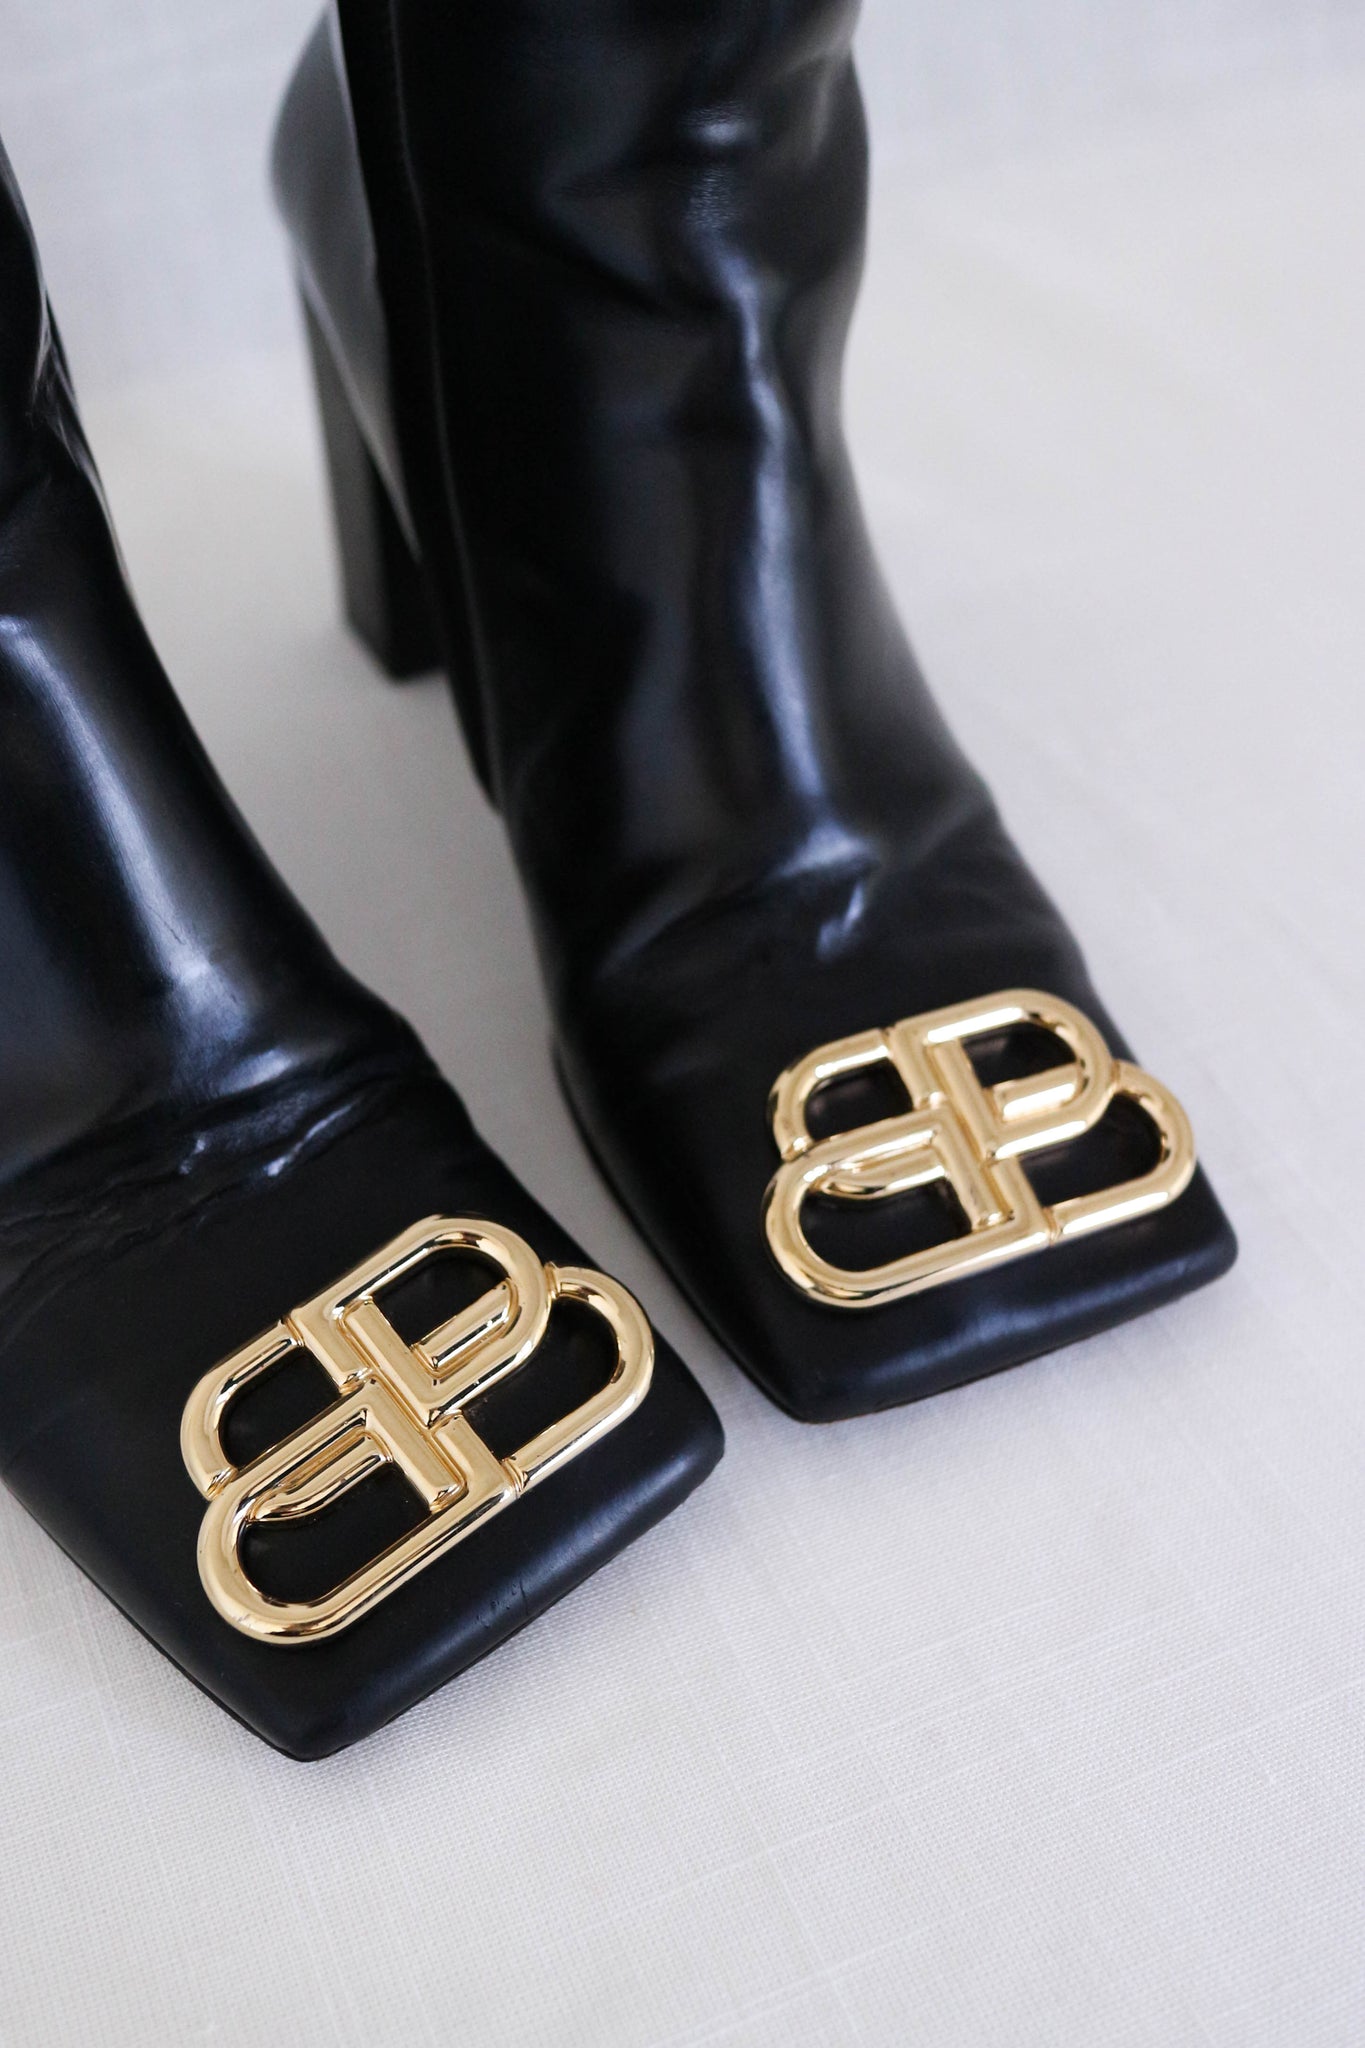 Balenciaga Boots That Look Like Socks 8 Cheap Alternative Styles   Footwear News